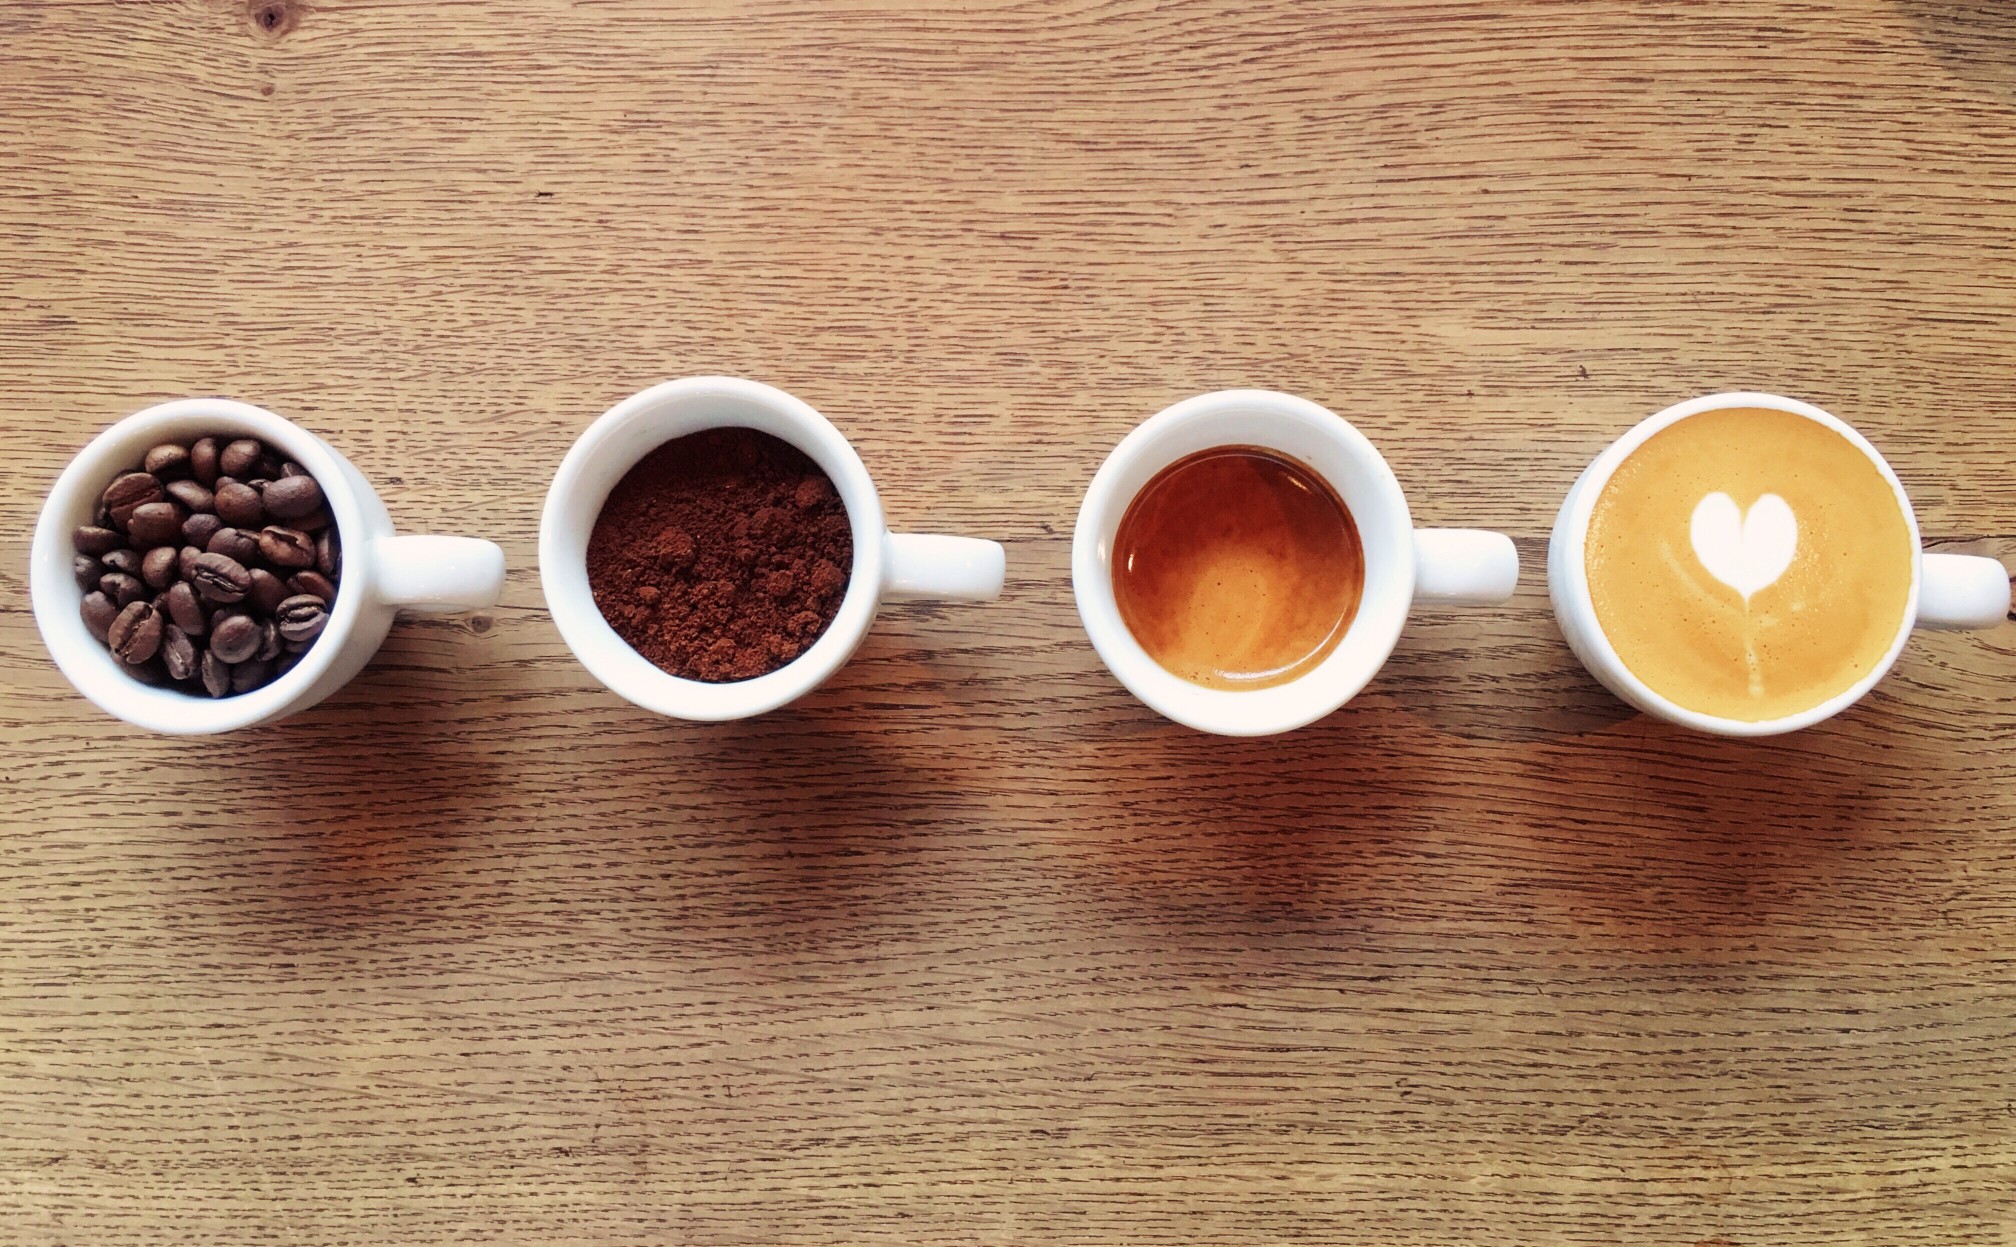 Kaffee-Genuss dank Kaffee Vollautomat - ideal für Home-Office & Büro! Bild: @nikos.konstadinidis via Twenty20